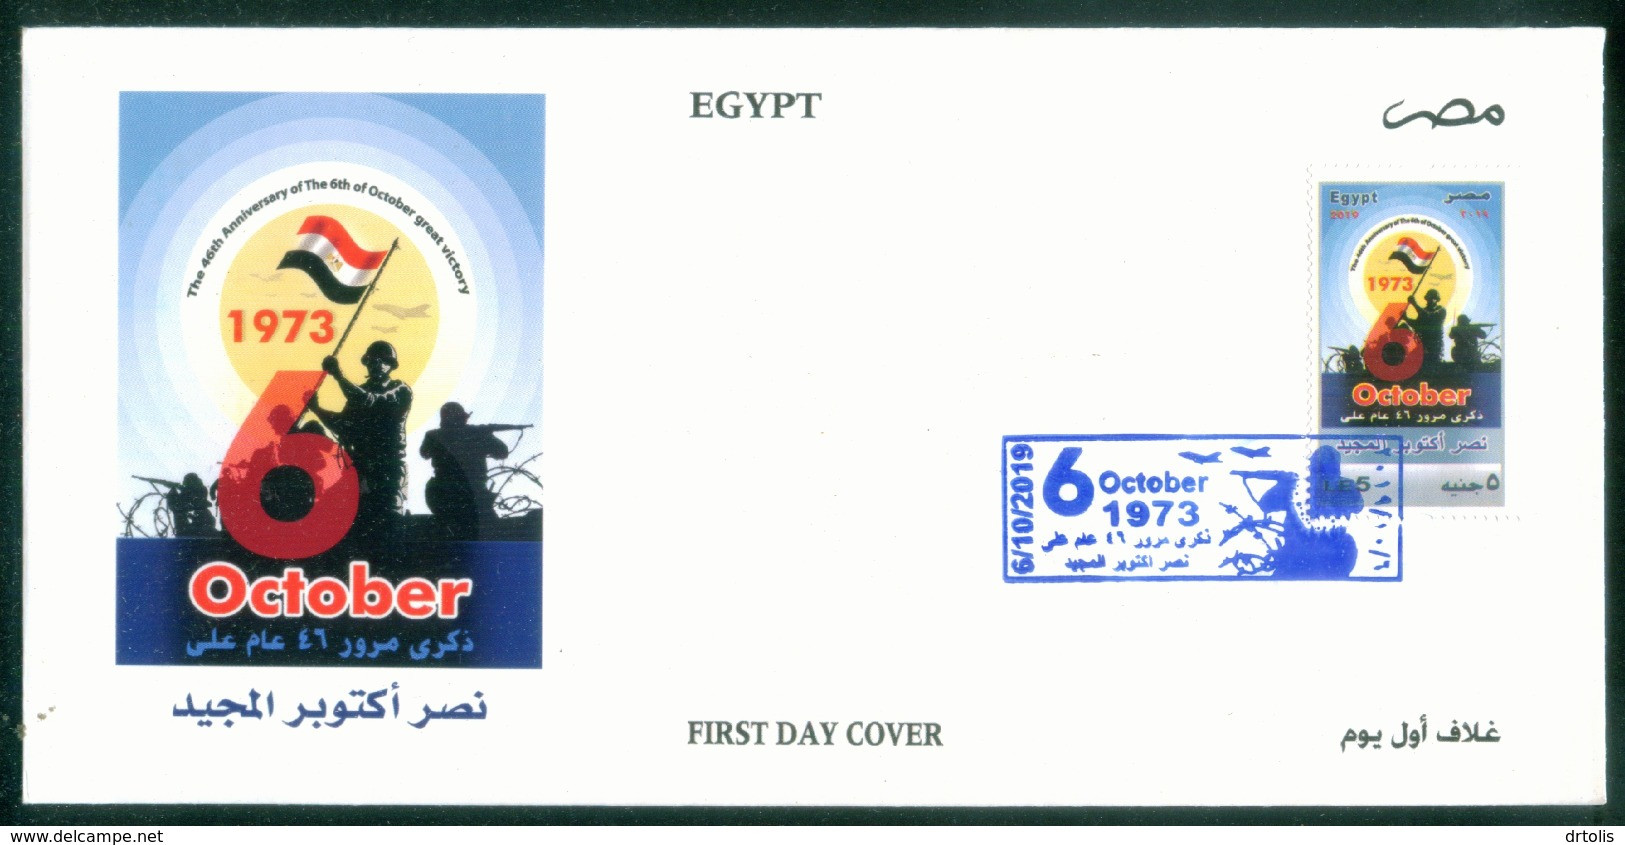 EGYPT / ISRAEL / 2019 / 6TH OCTOBER WAR / YOM KIPPUR / FLAG / SOLDIERS / GUNS / BARBED WIRE / FDC - Cartas & Documentos